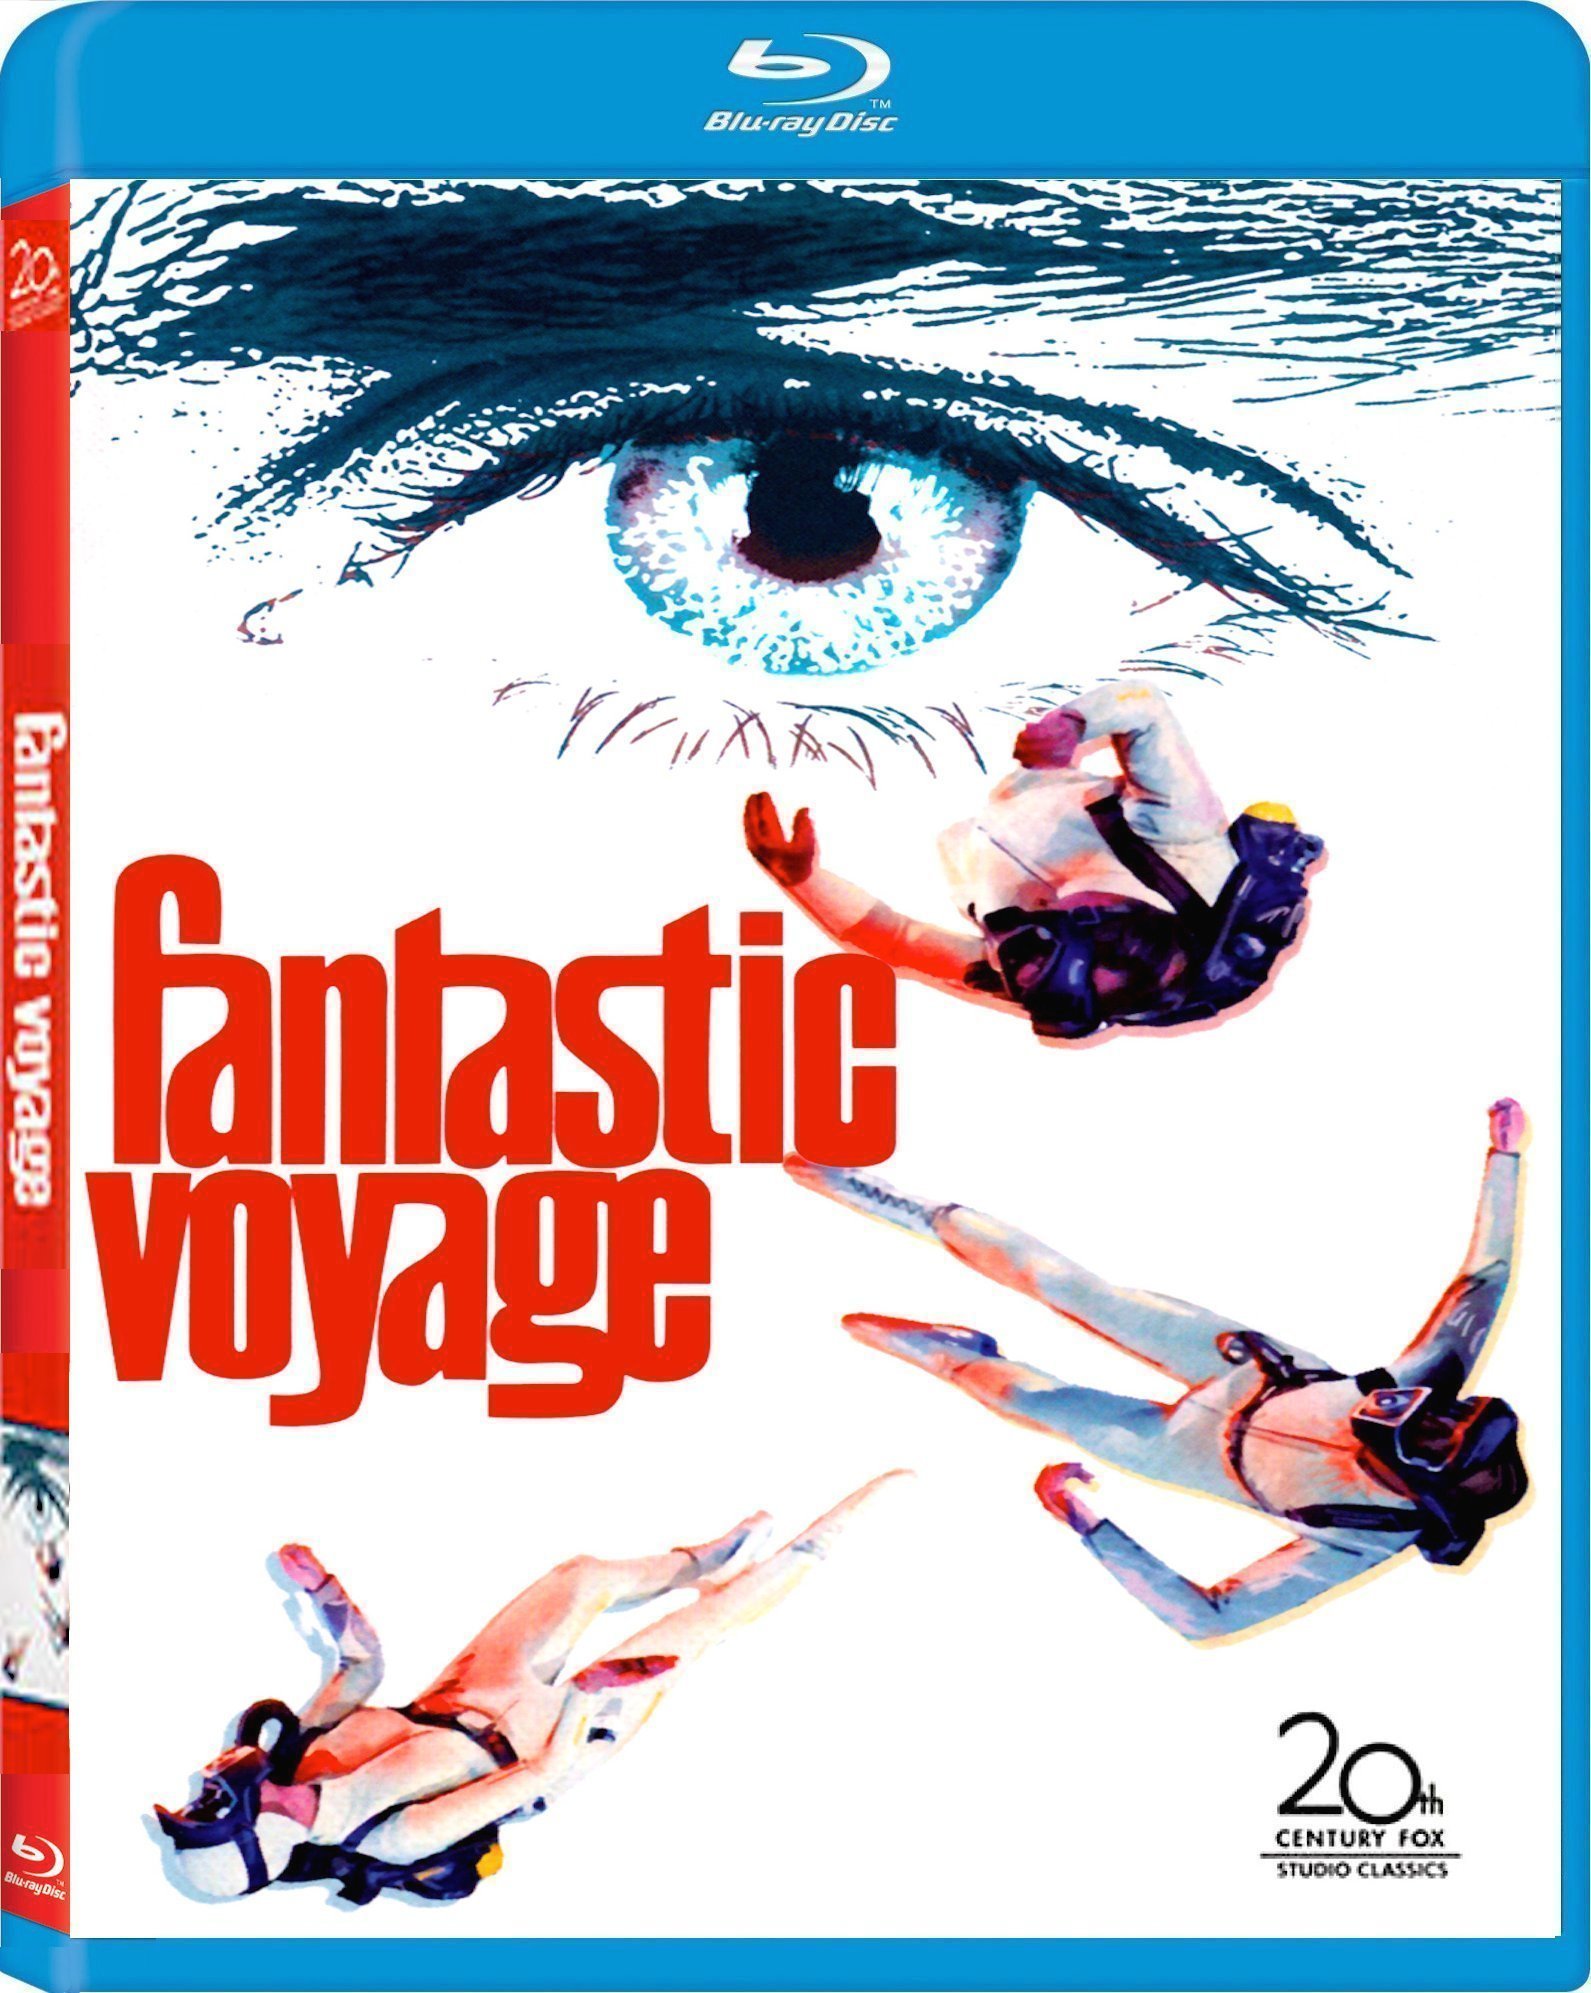 fantastic voyage movie wikipedia